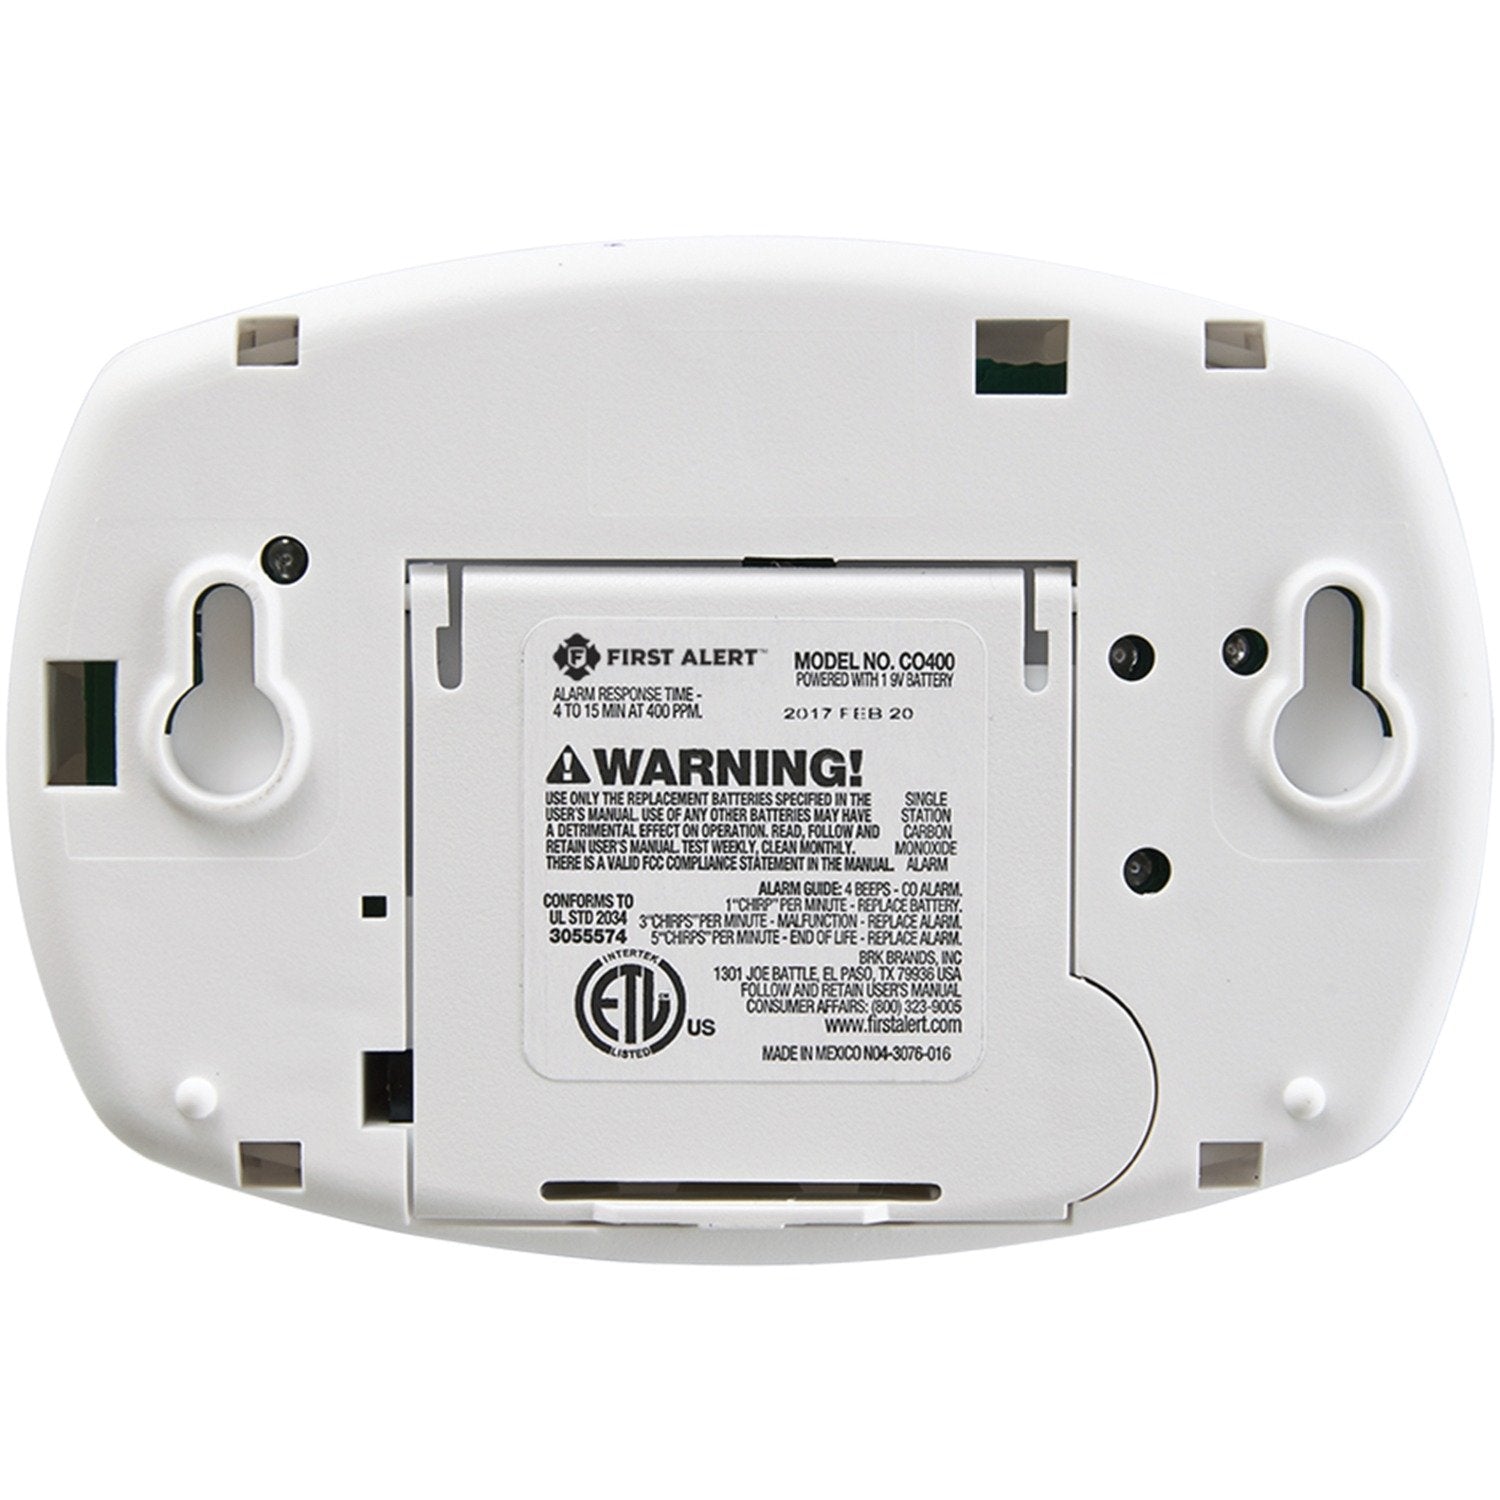 First Alert CO410 Battery Operated Carbon Monoxide Alarm - Digital